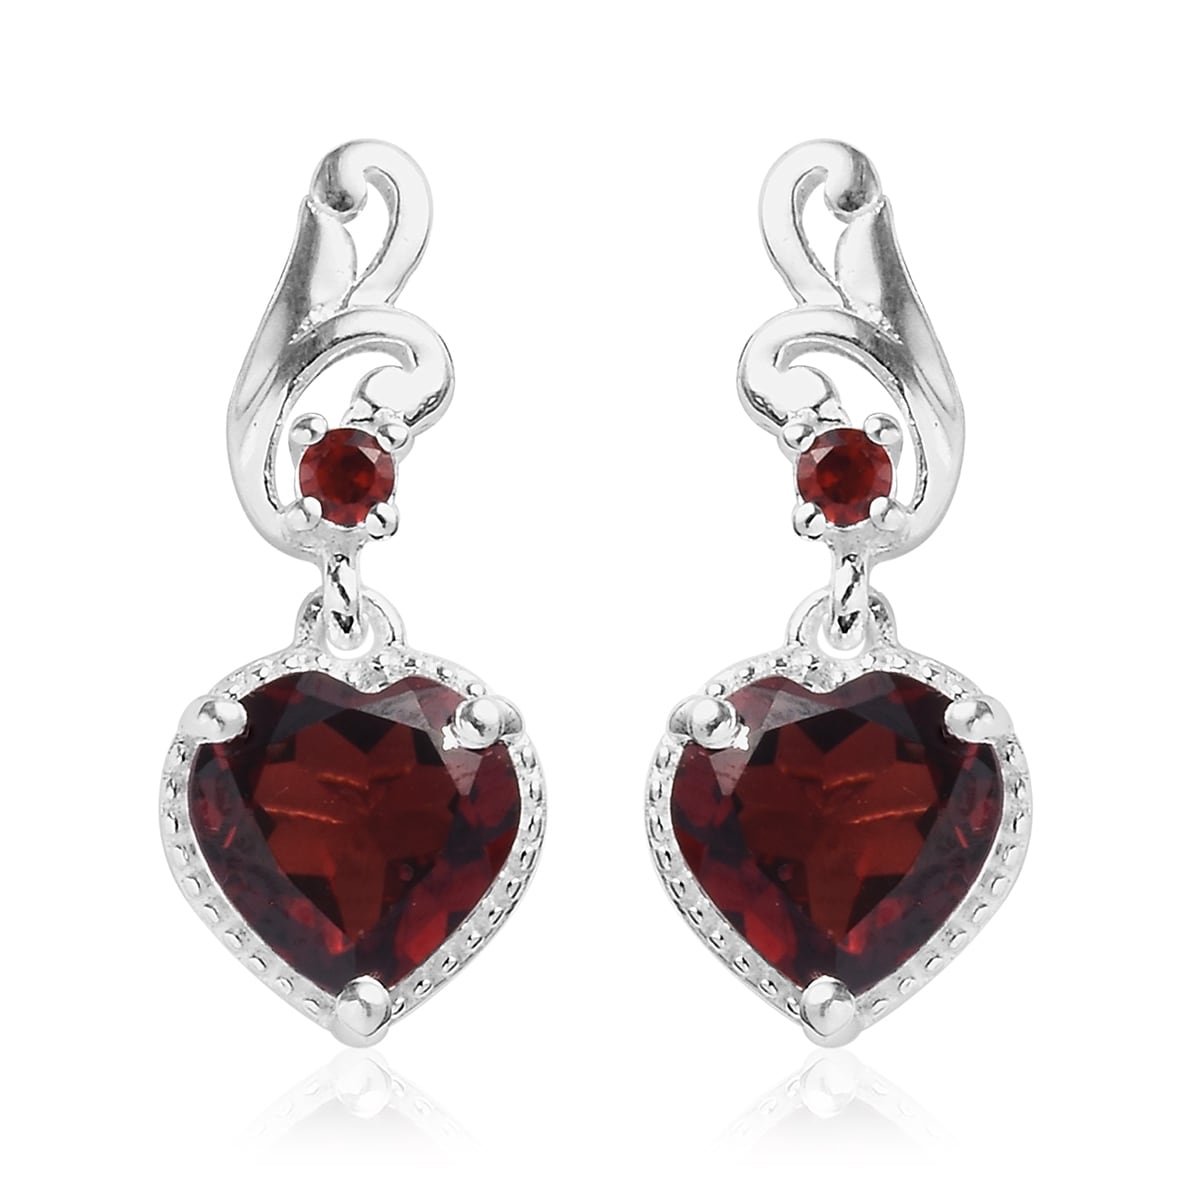 9ct Gold Garnet Heart Drop dangly earrings Gift Boxed Made in UK 